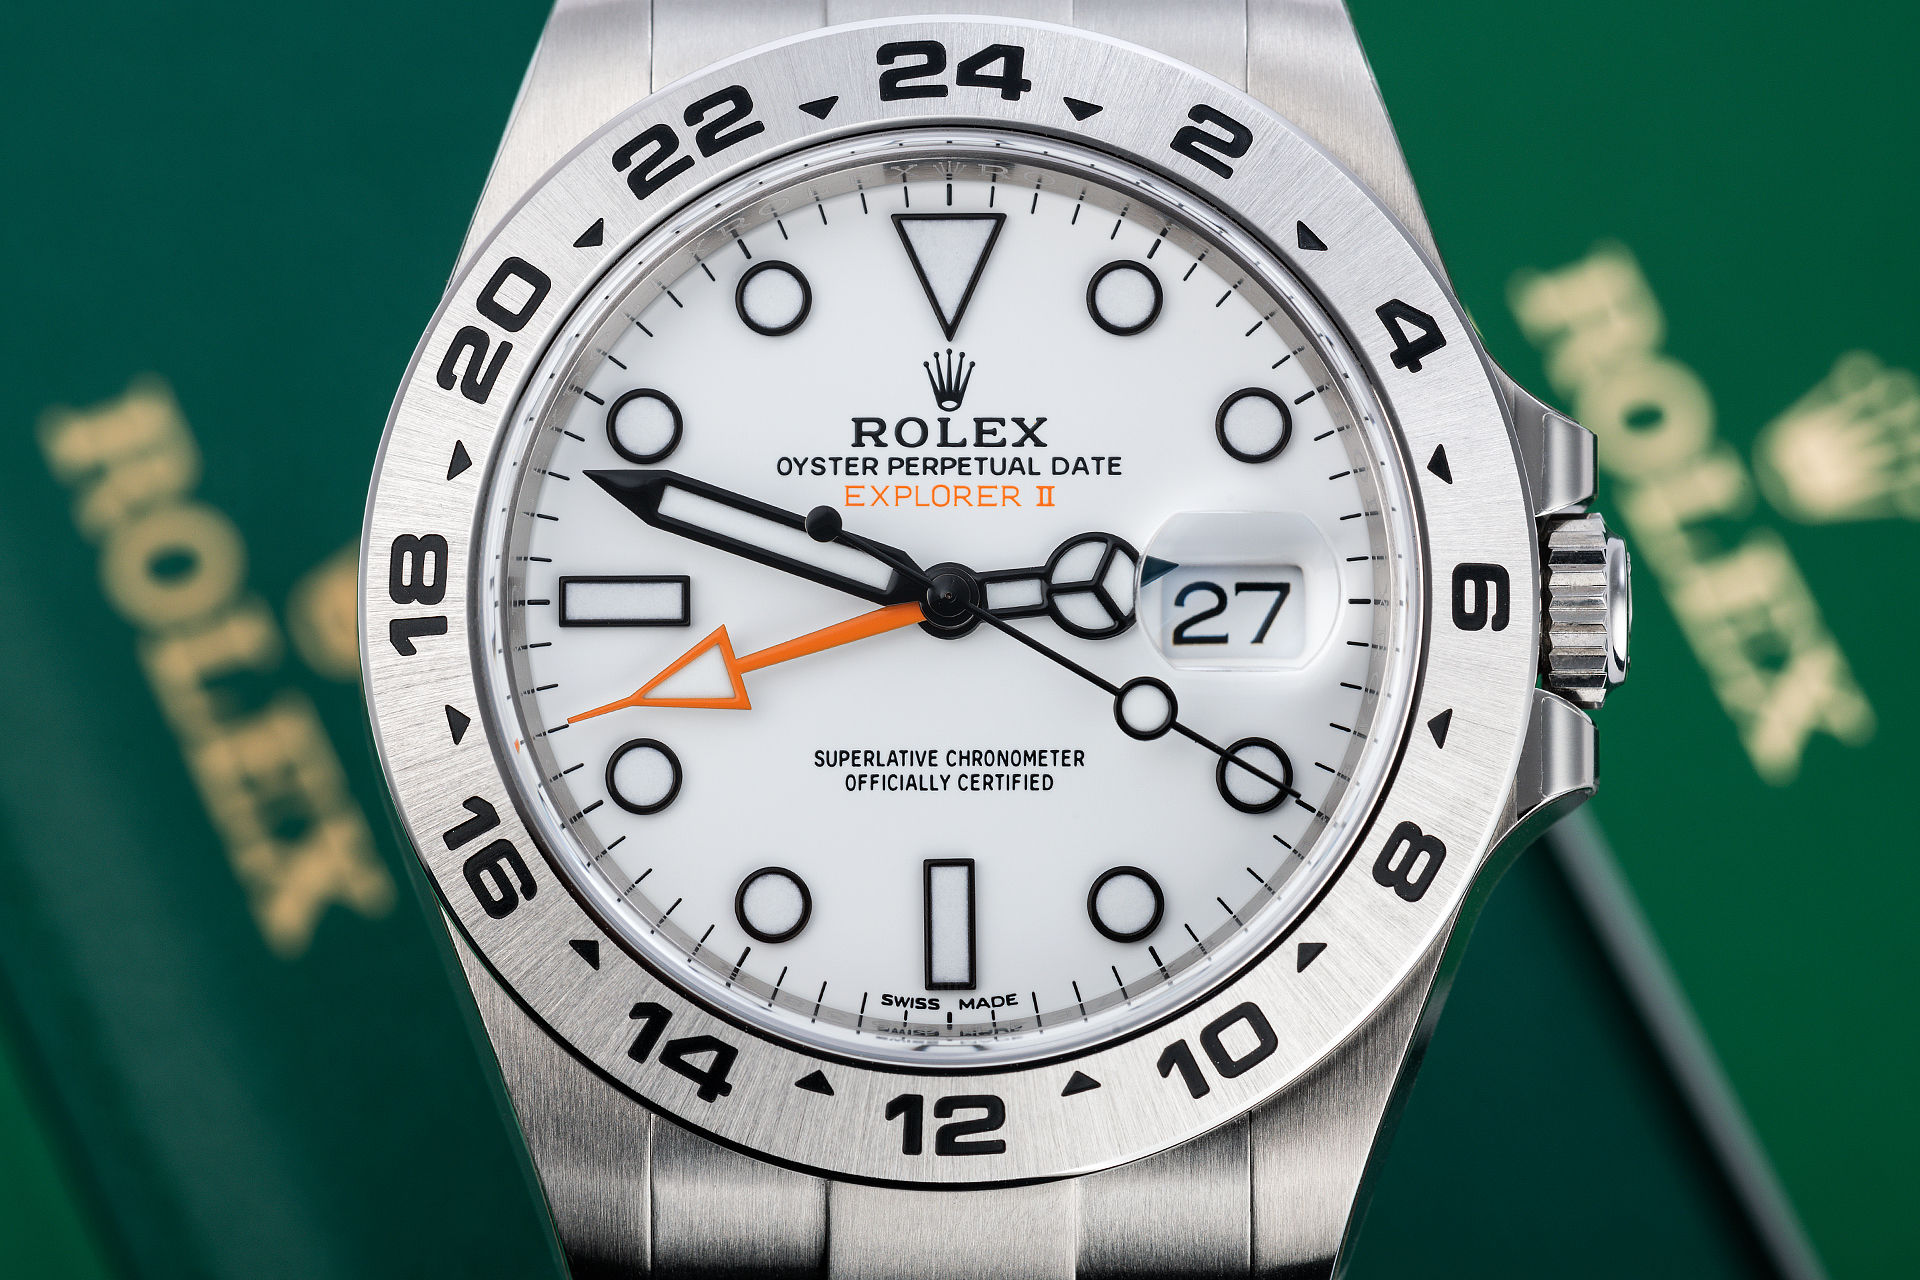 ref 216570 | 5 Year Warranty | Rolex Explorer II